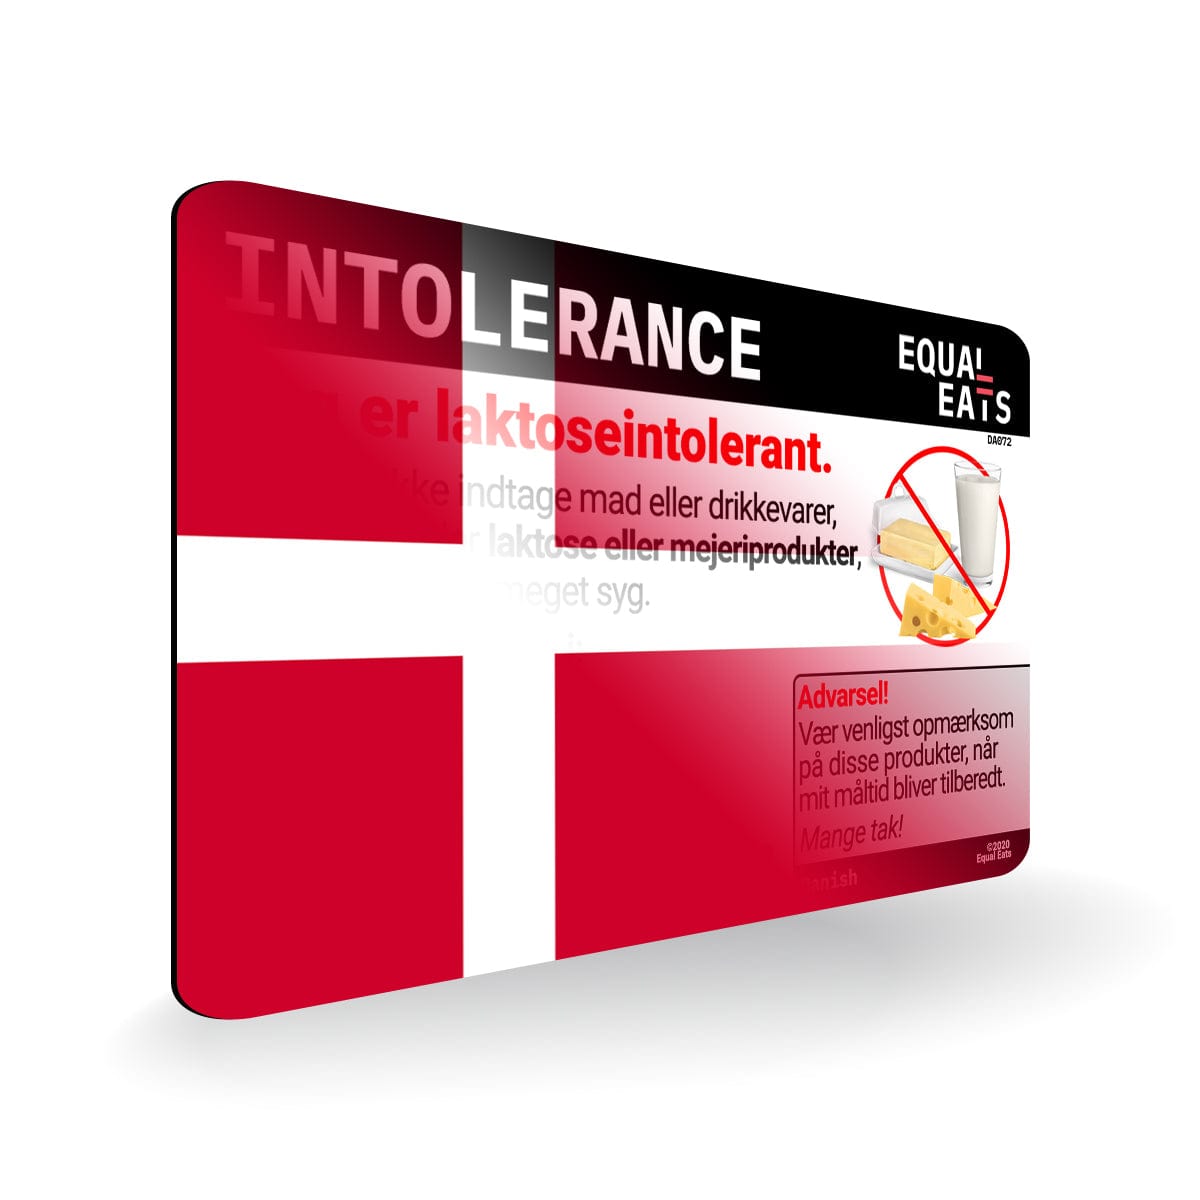 Lactose Intolerance in Danish. Lactose Intolerant Card for Denmark